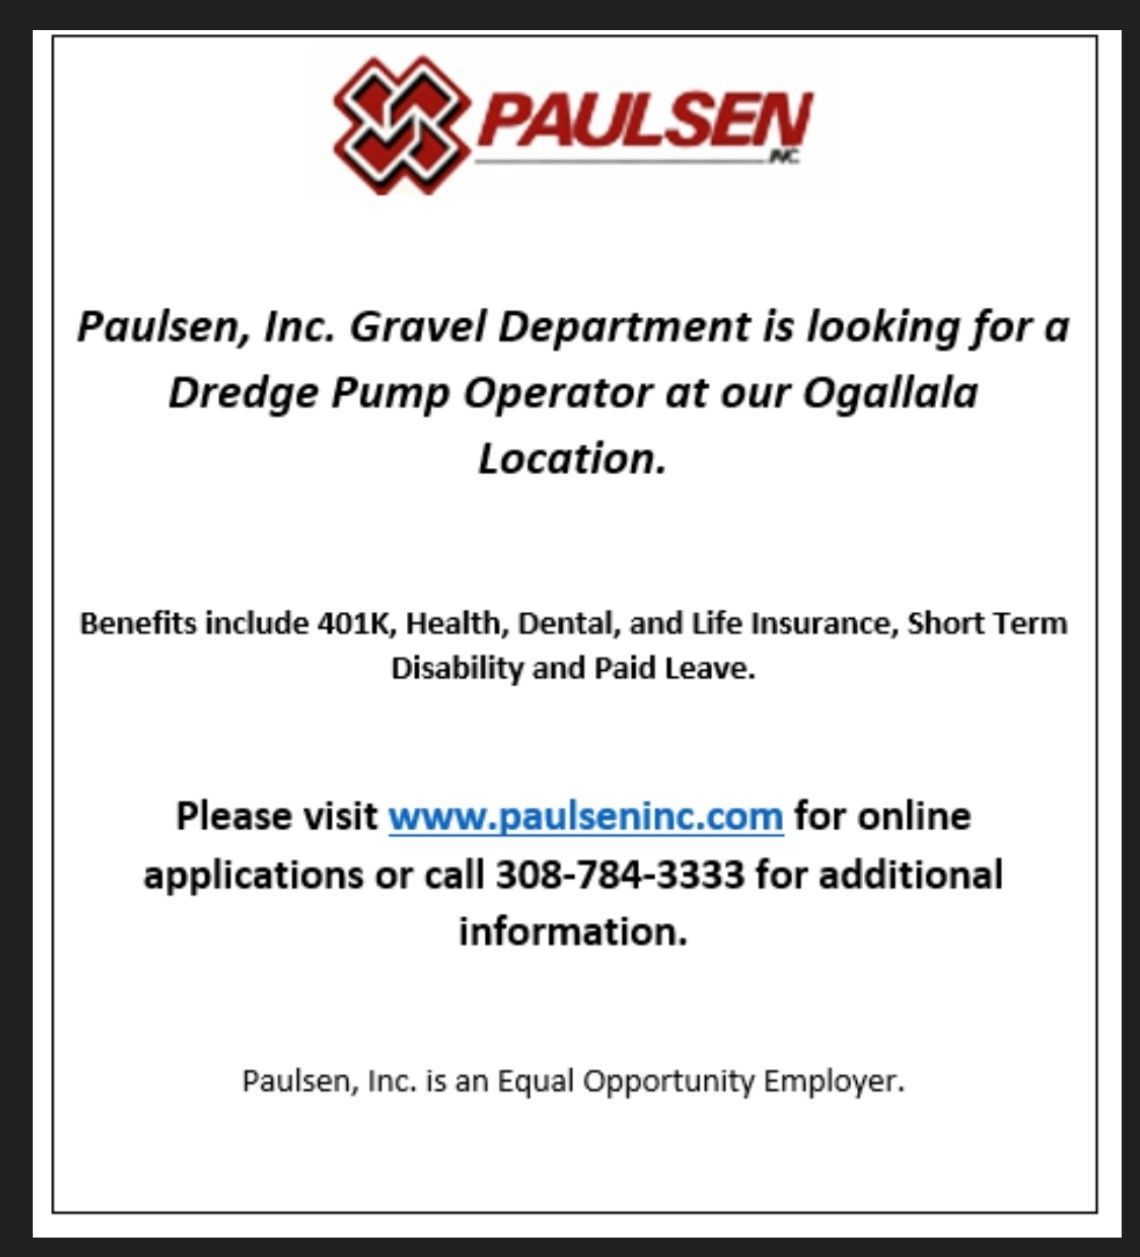 Paulsen, Dredge Pump Operator